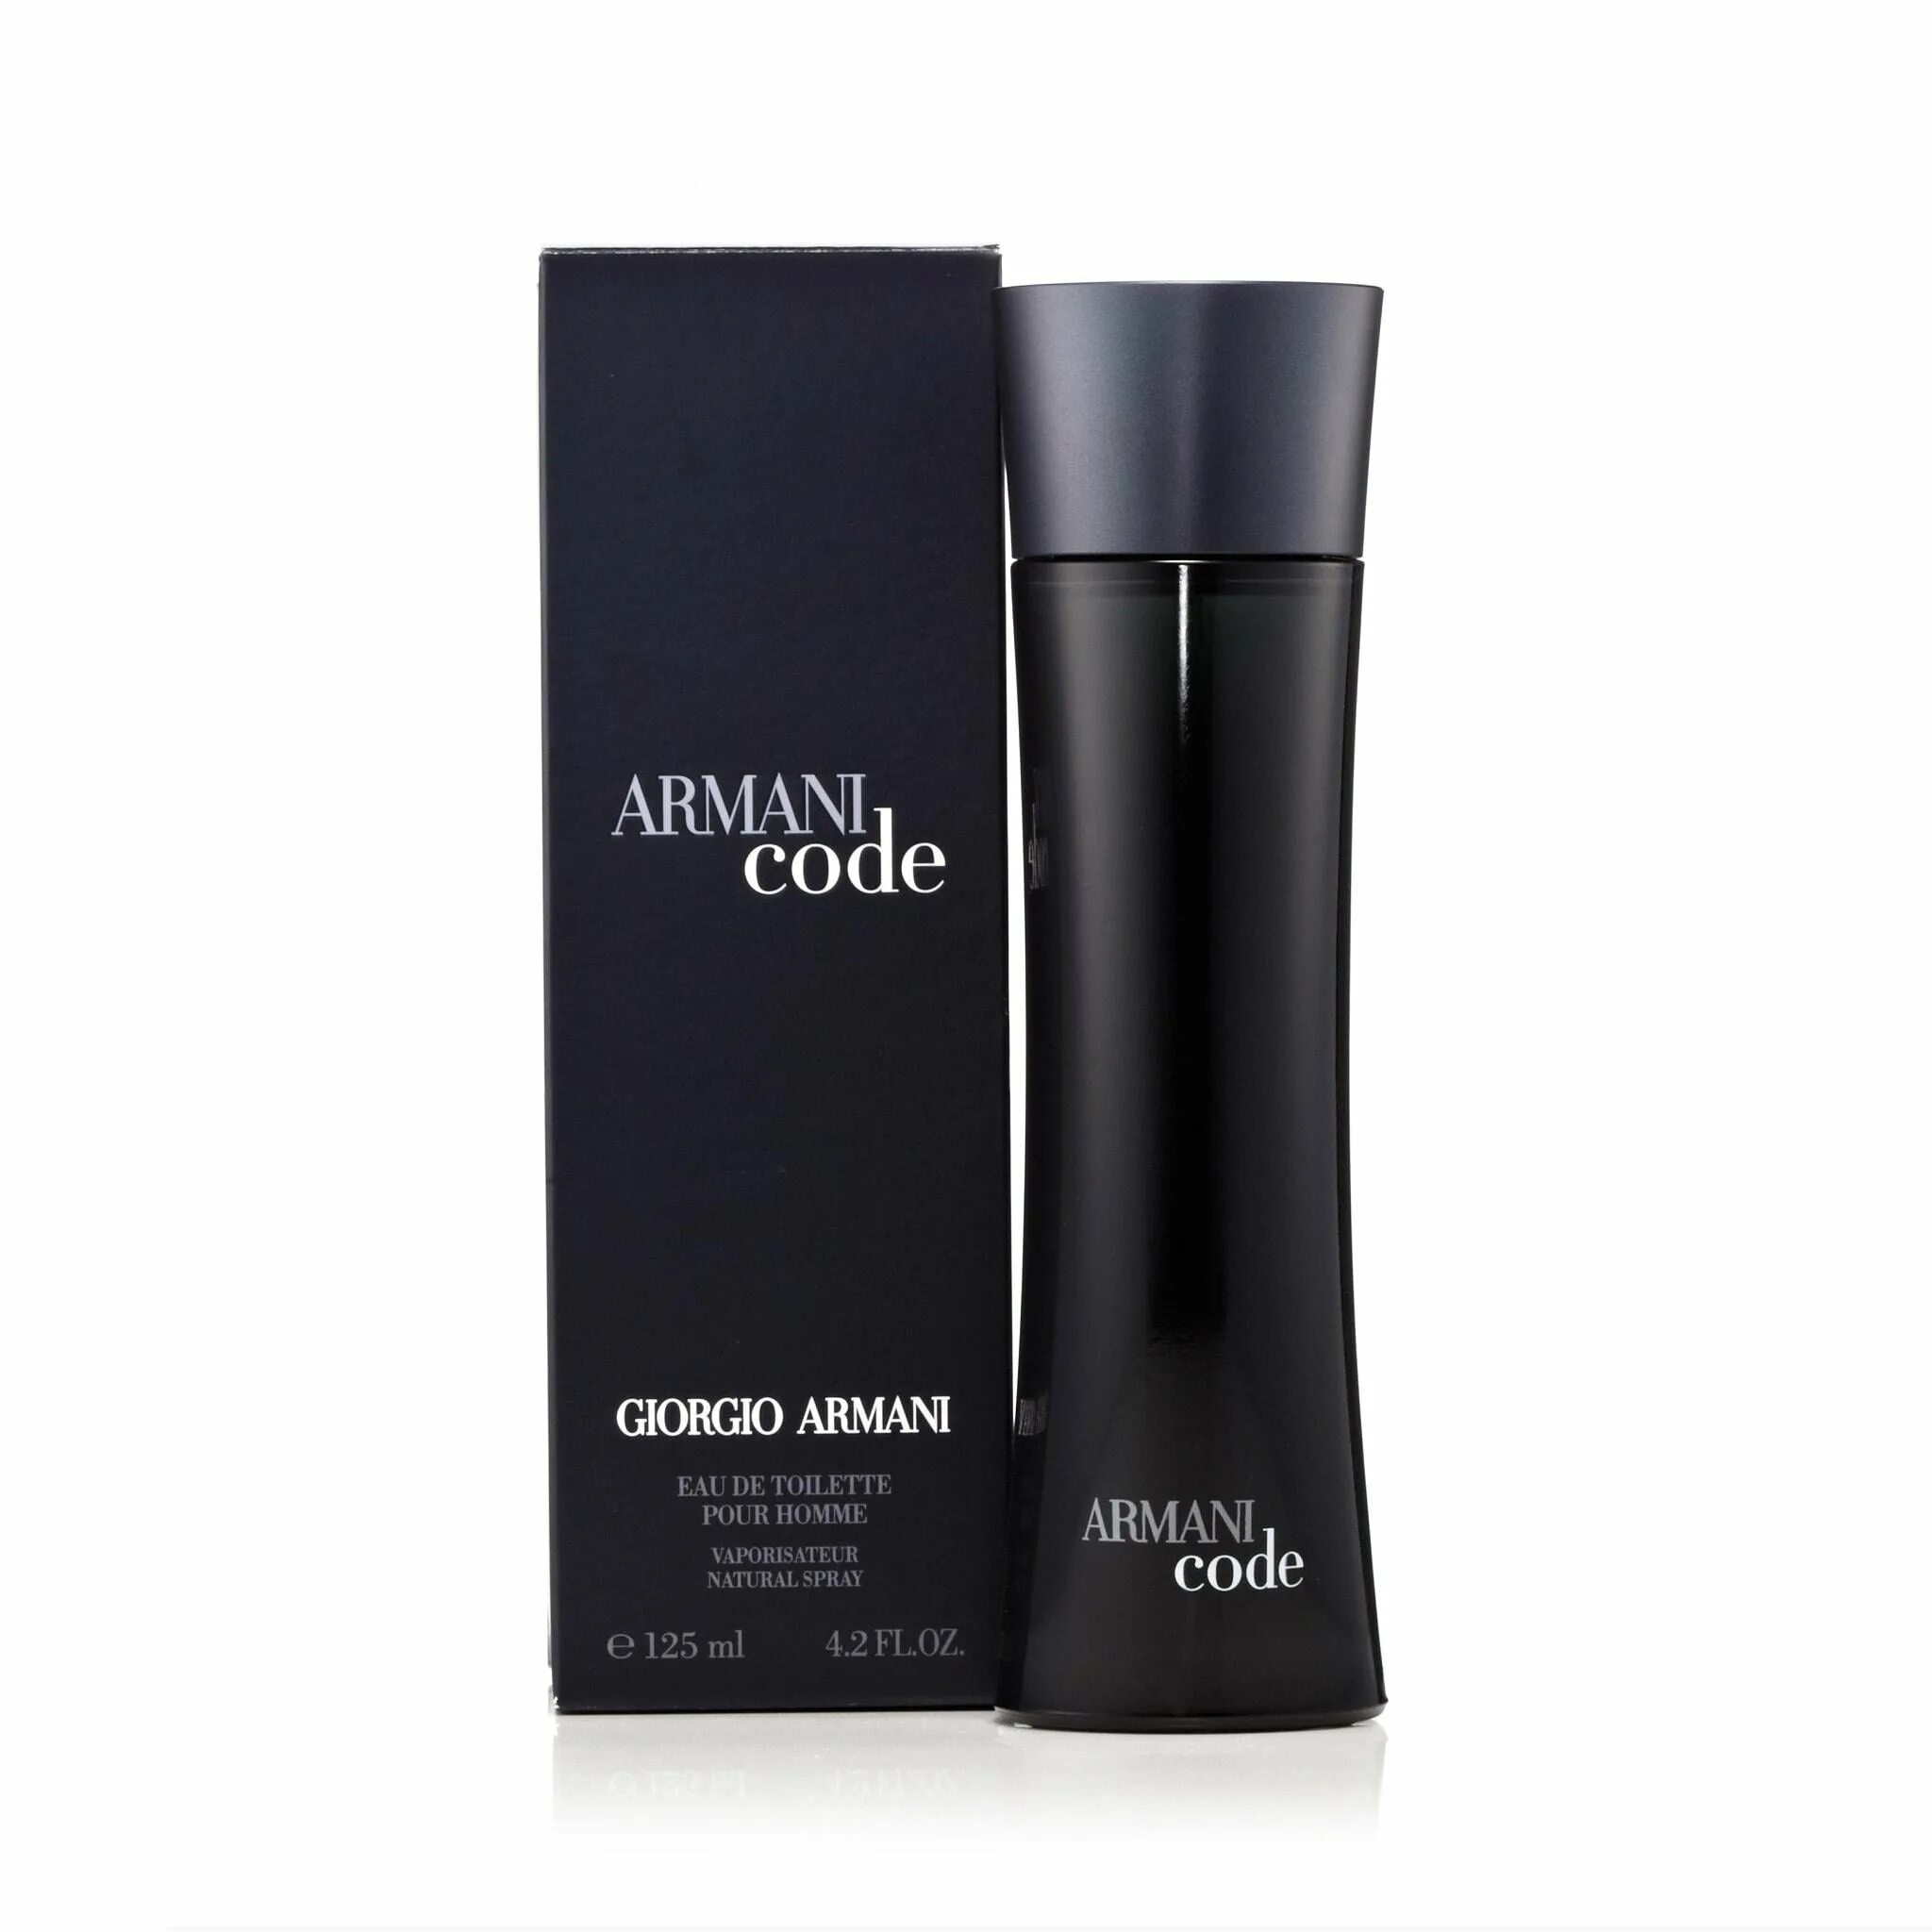 Giorgio Armani Armani code. Giorgio Armani Armani code Parfum, 100 ml. Giorgio Armani "Armani code Parfum" 125 ml. Armani code Black for men.